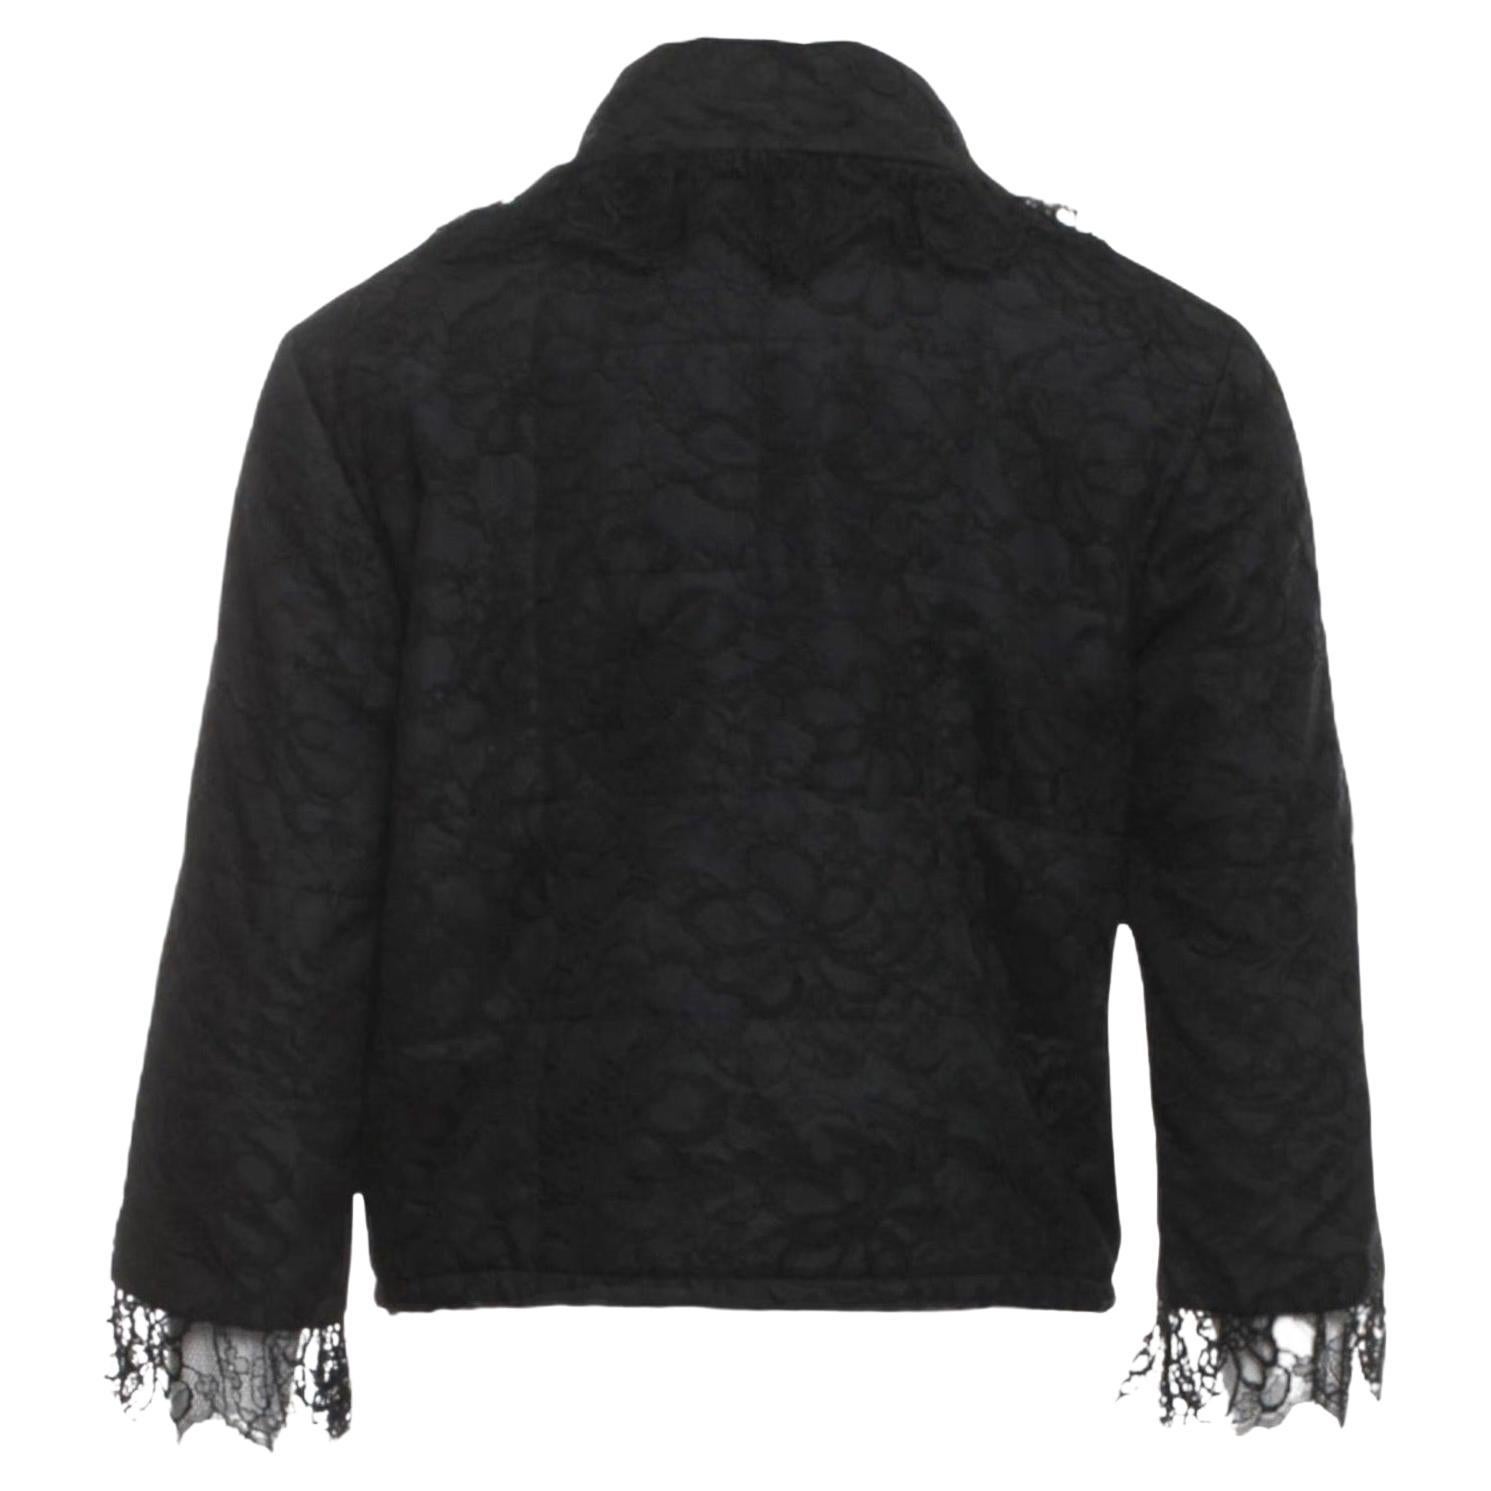 UNWORN Chanel Black Lace & Silk Evening Jacket Blazer with Drawstring Detail 38 In Good Condition For Sale In Switzerland, CH